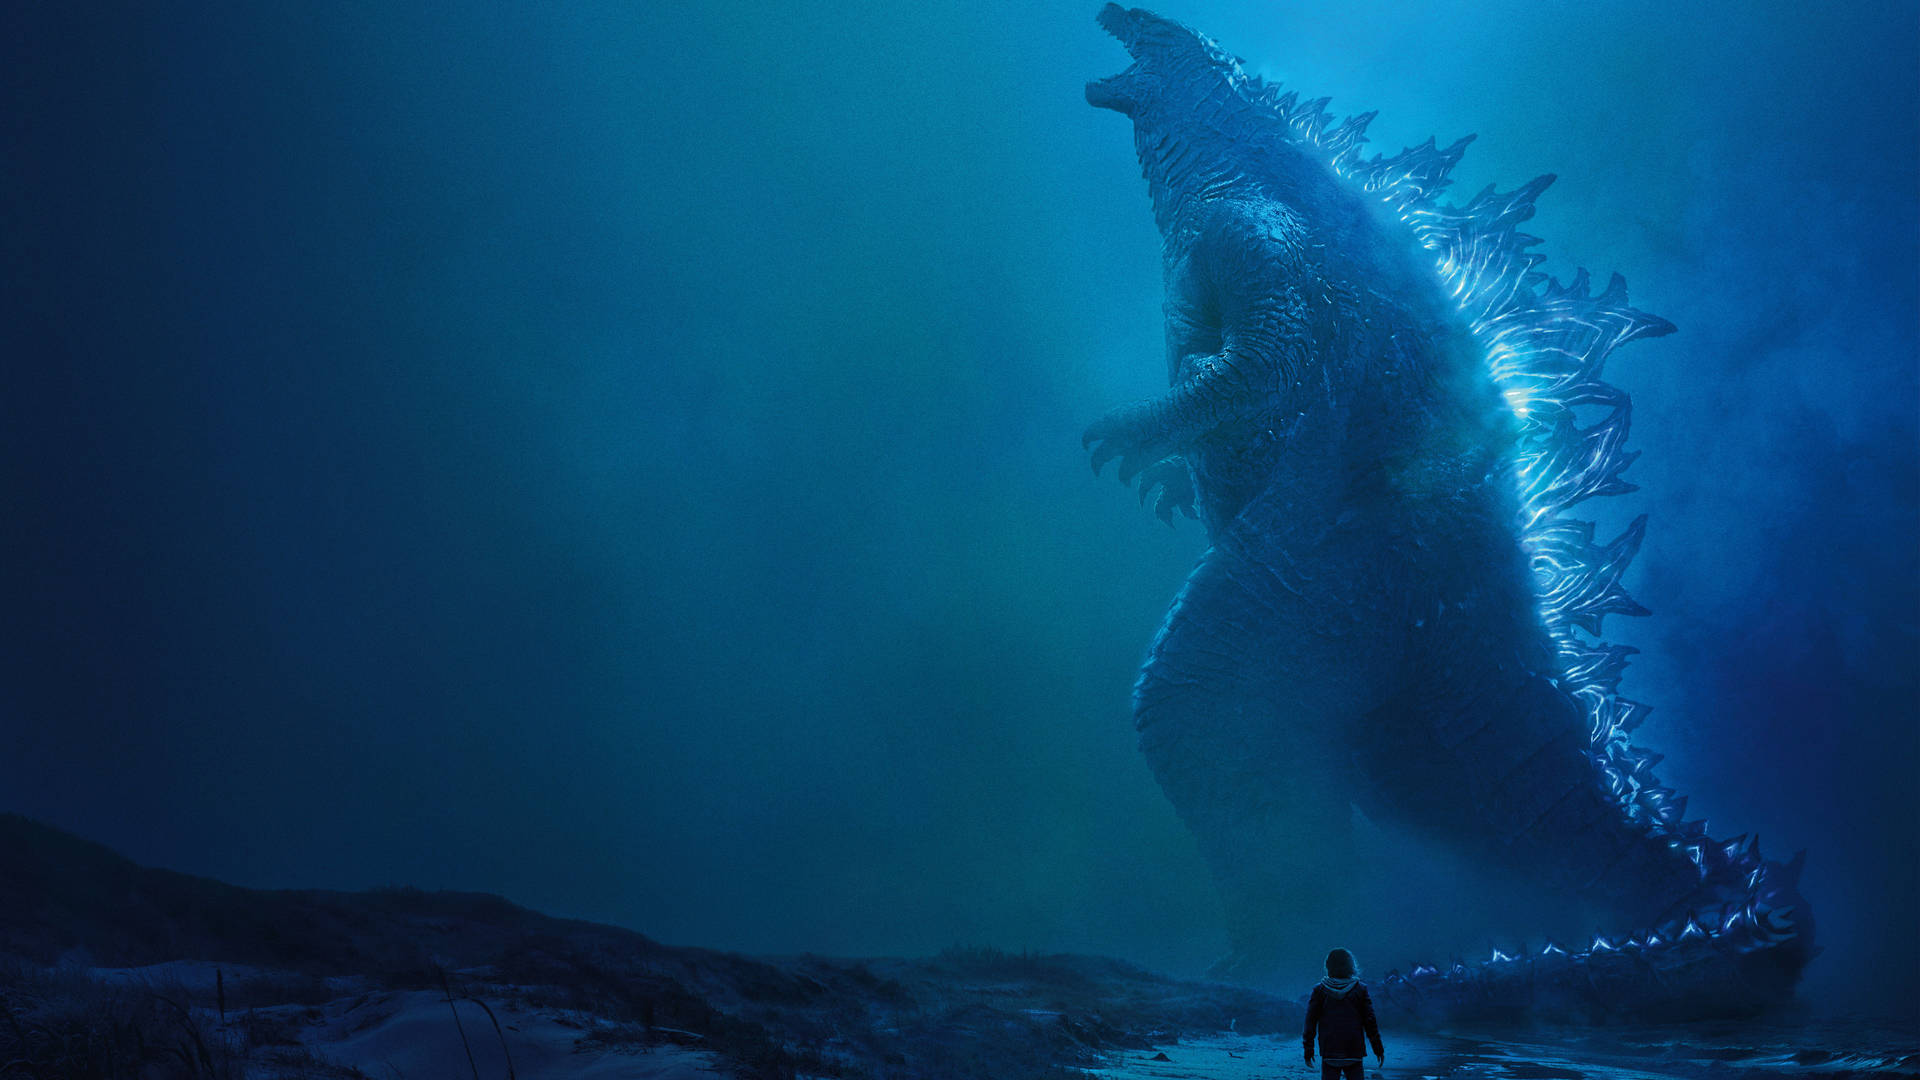 "Godzilla's Glowing Dorsal Spine" Wallpaper